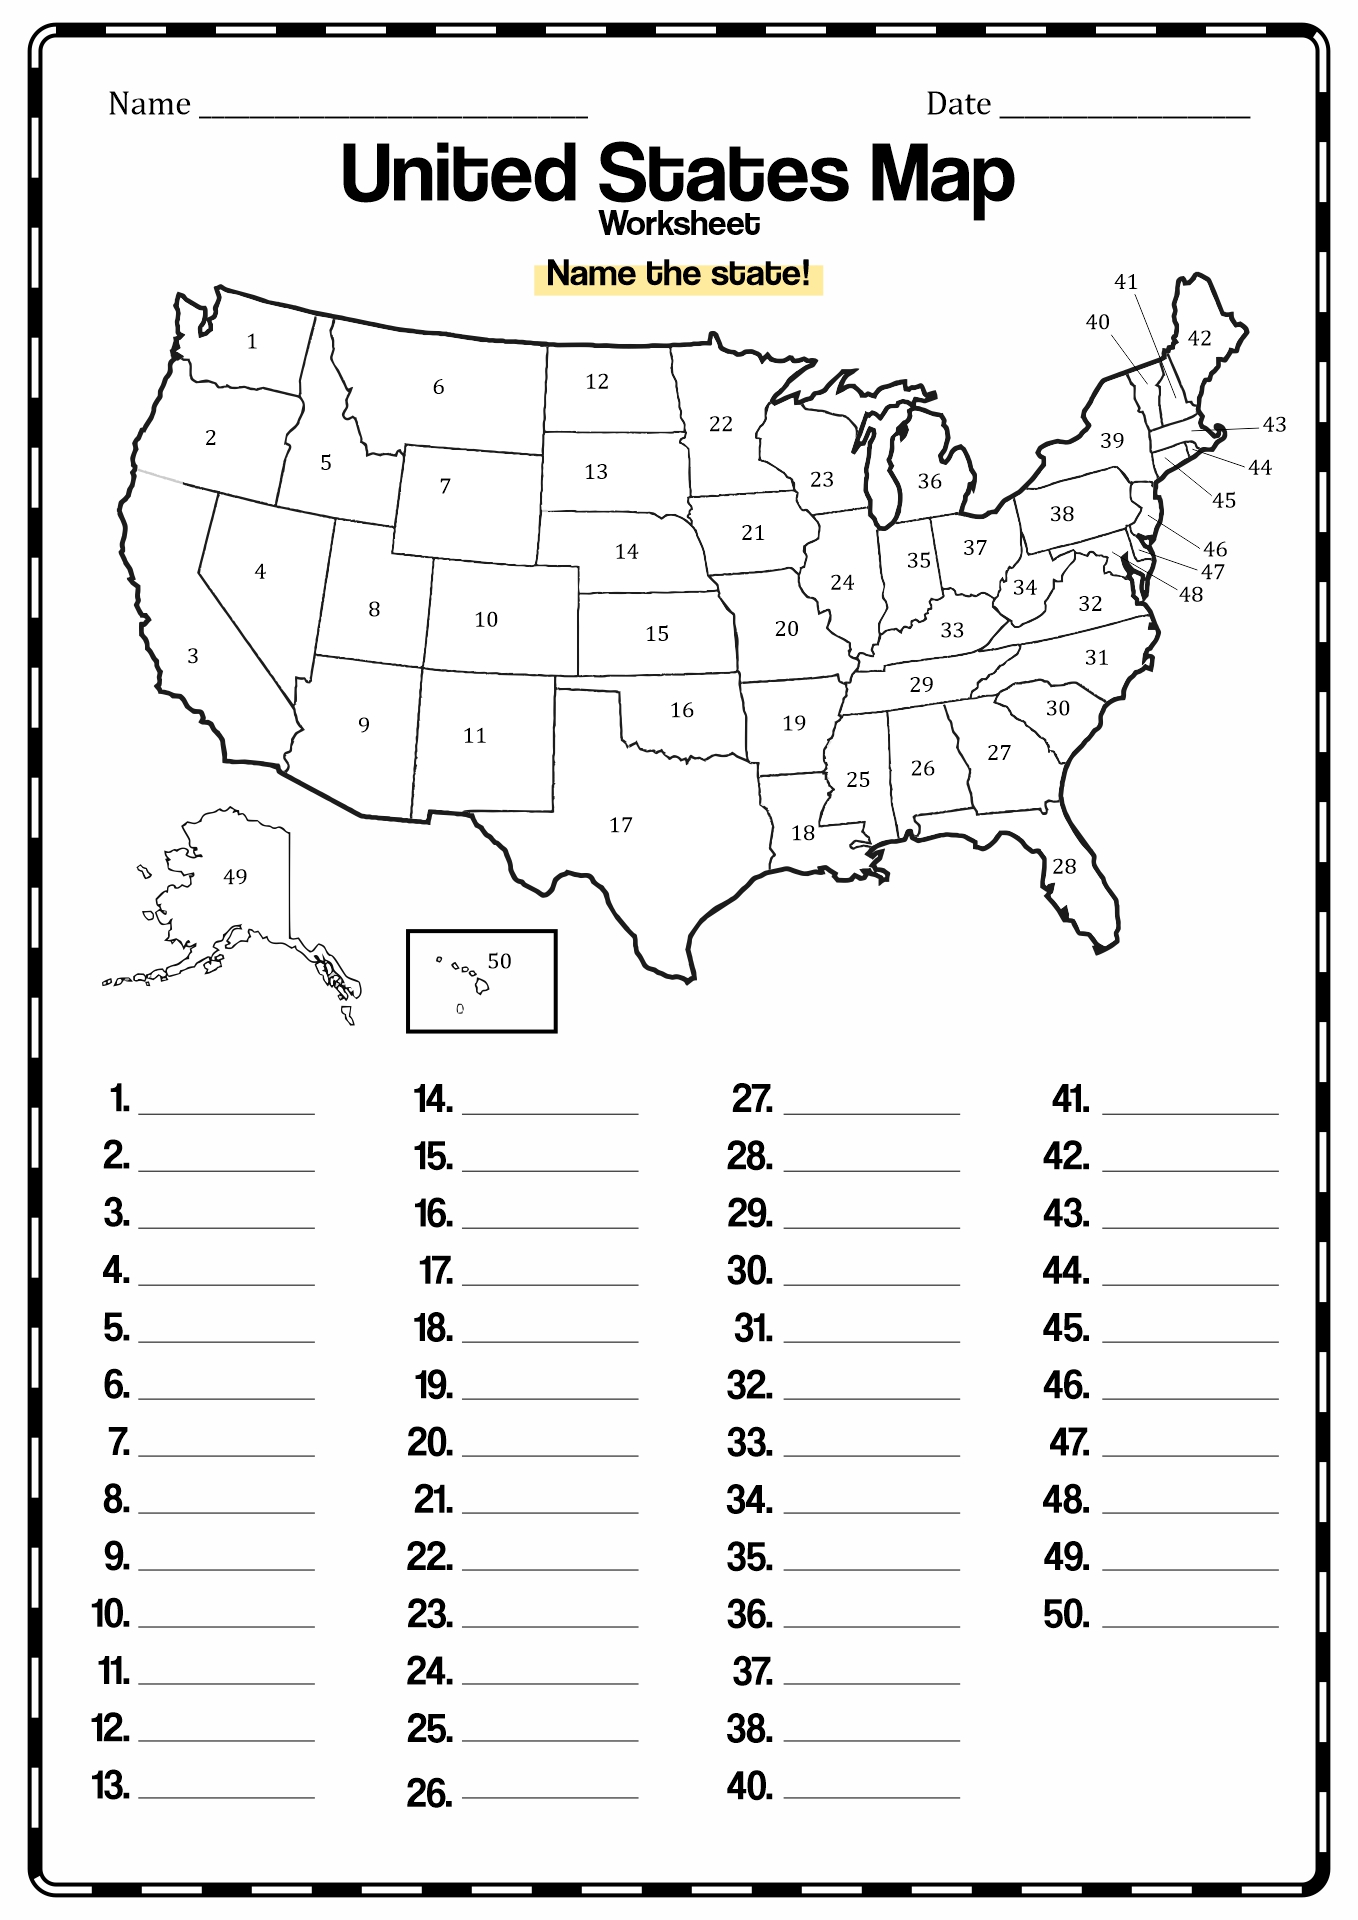 United States Map Worksheets Printable Image